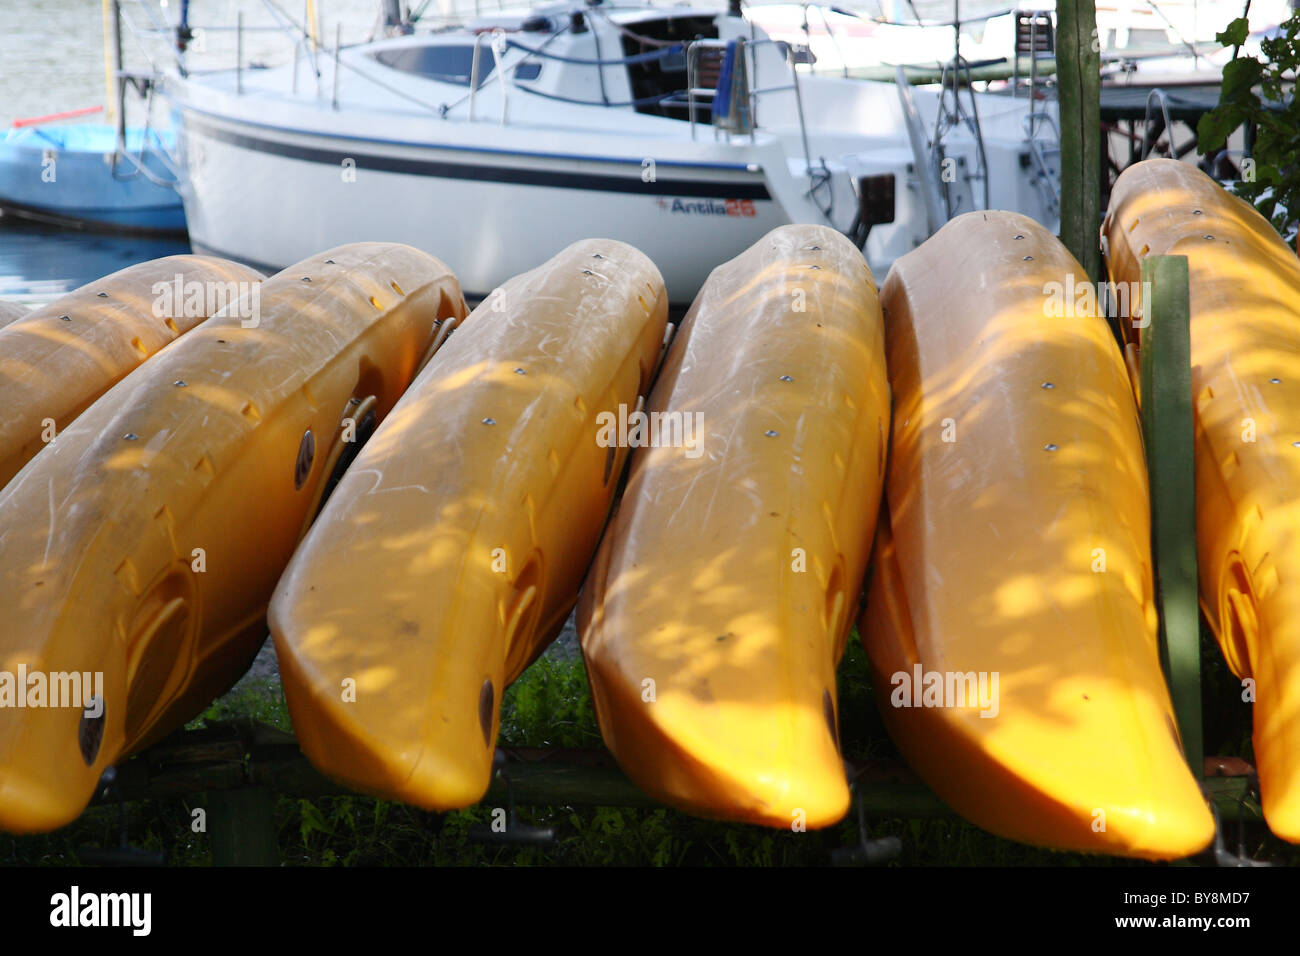 Row of yellow kayaks for rent. Wdzydze, Kashubia, Poland. Stock Photo